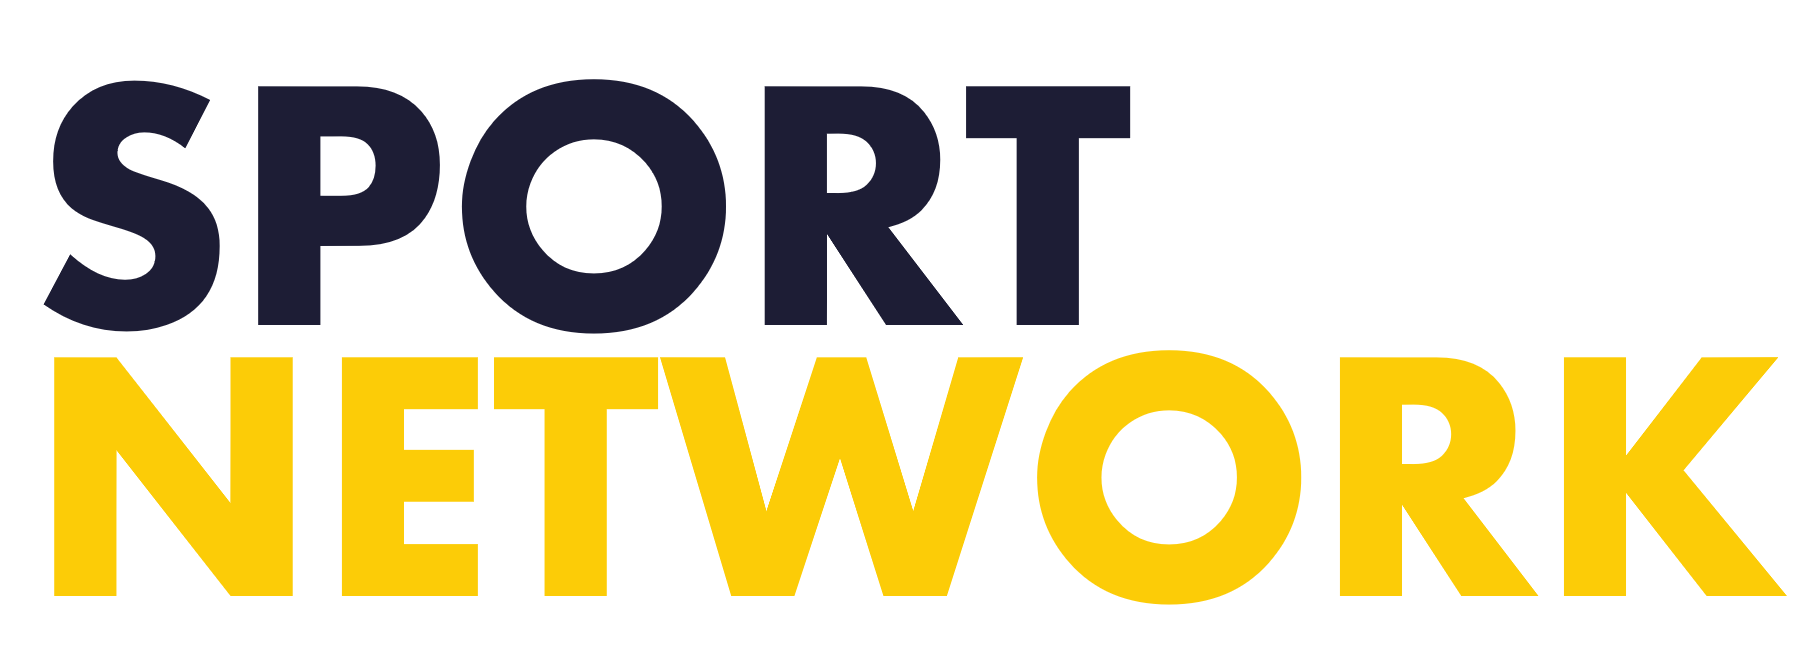 Sport Network